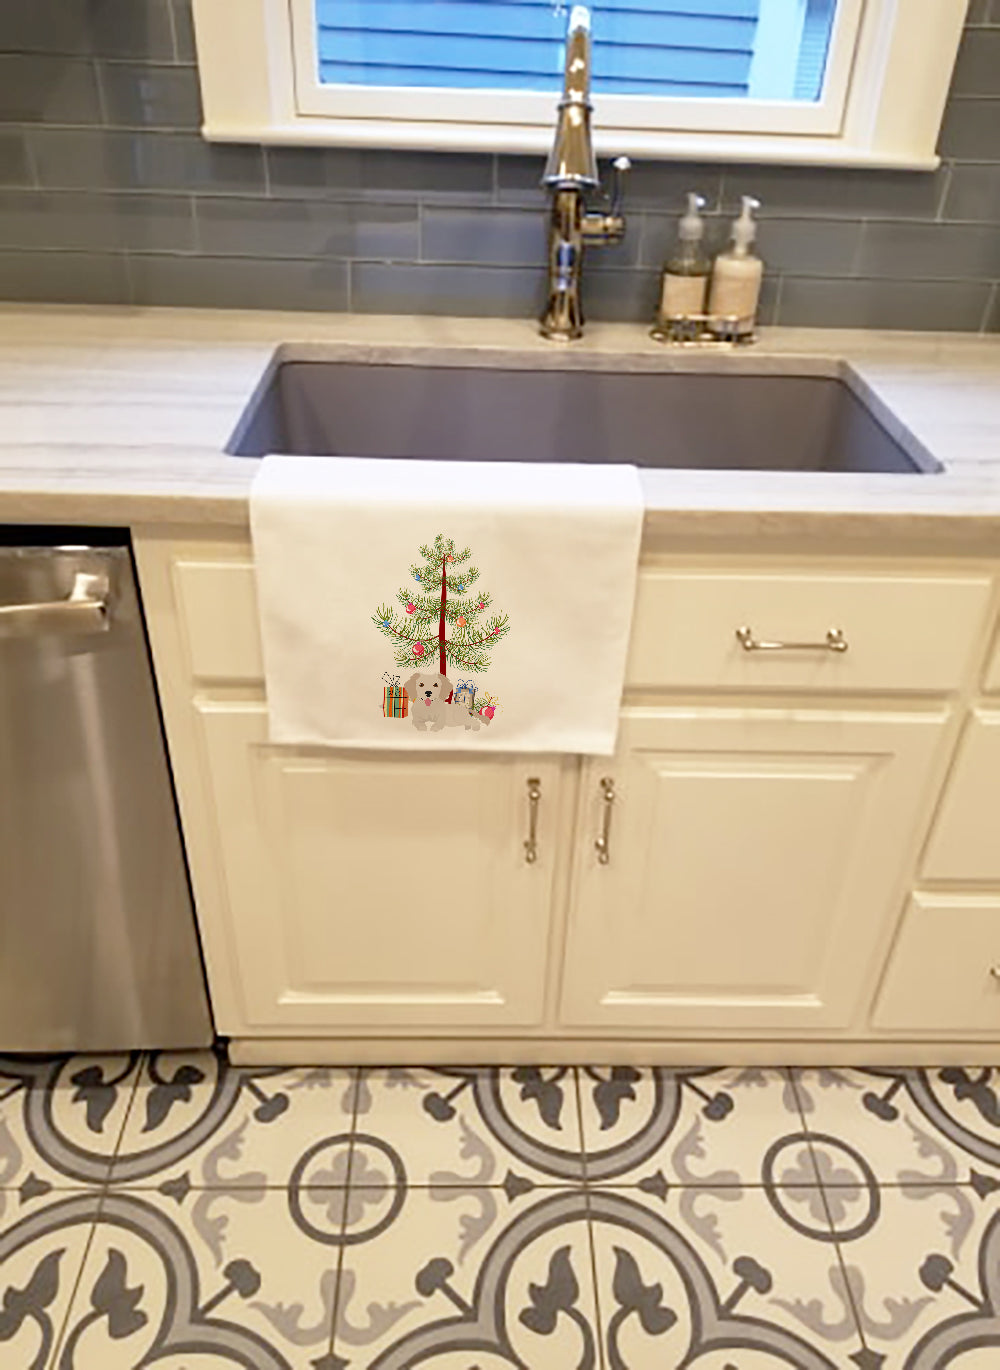 Buy this Small Greek Domestic Dog Kokoni #2 Christmas Tree White Kitchen Towel Set of 2